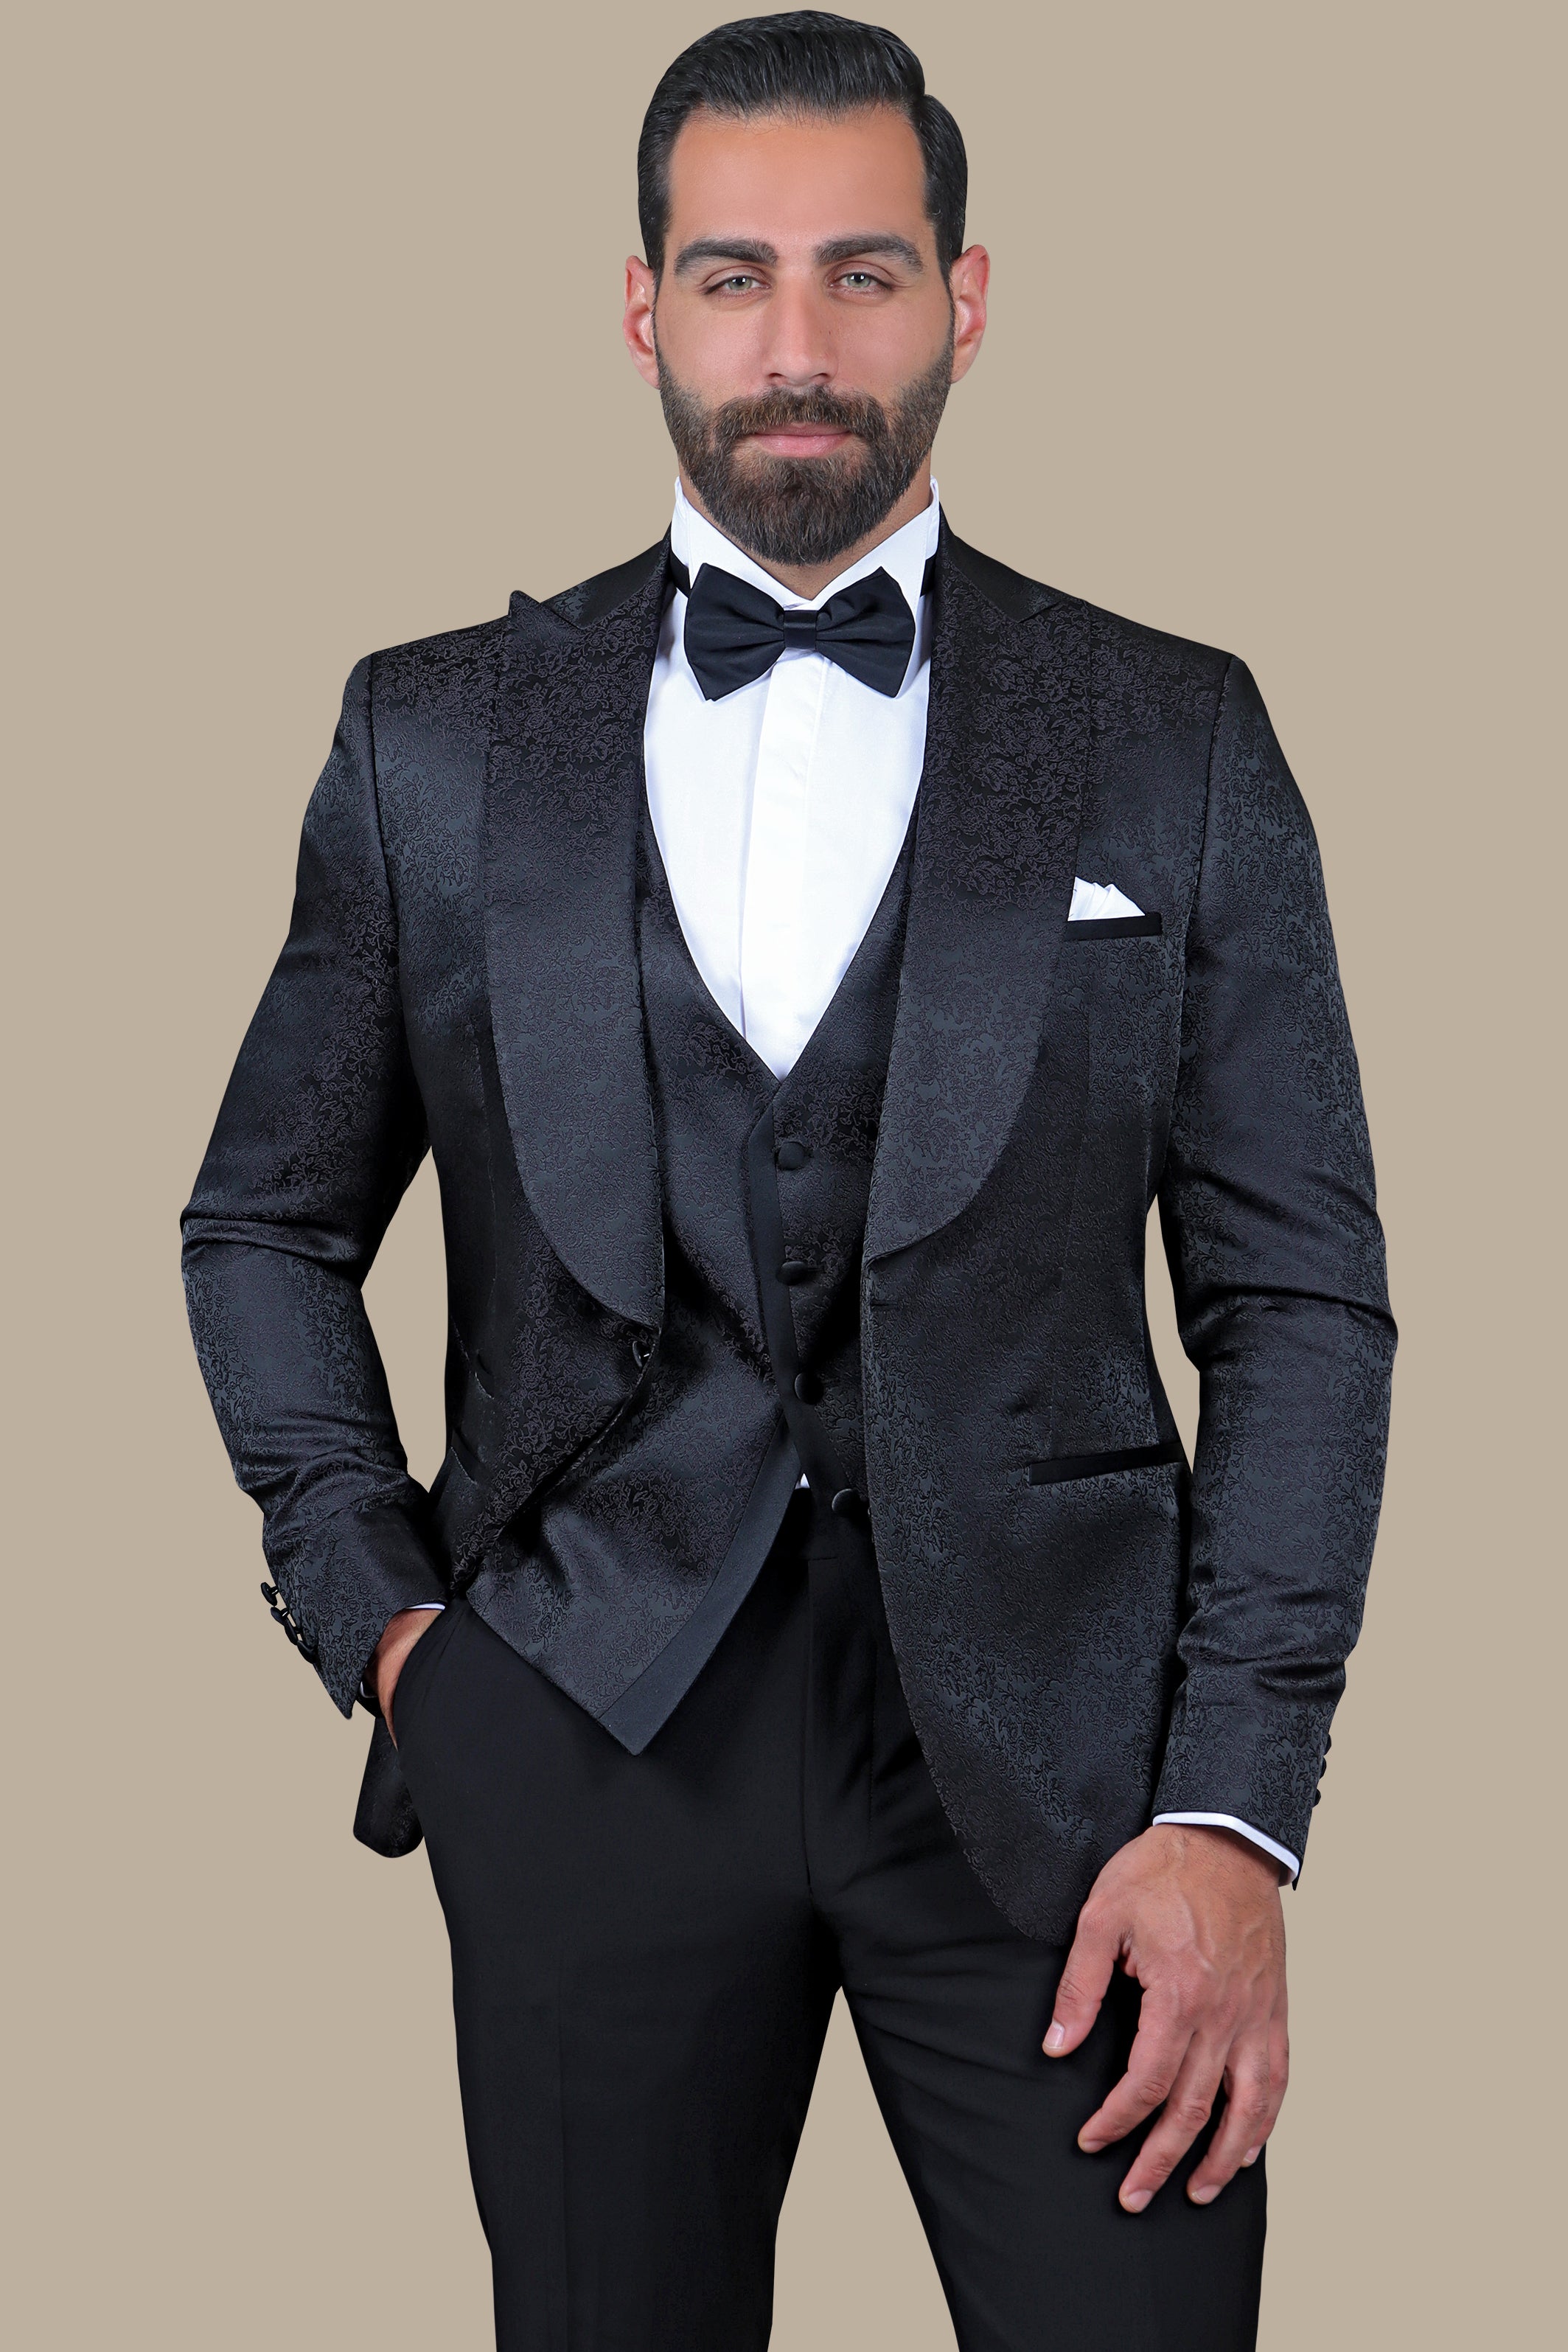 Floral Noir: FV Special Collection Tuxedo Suit in Black